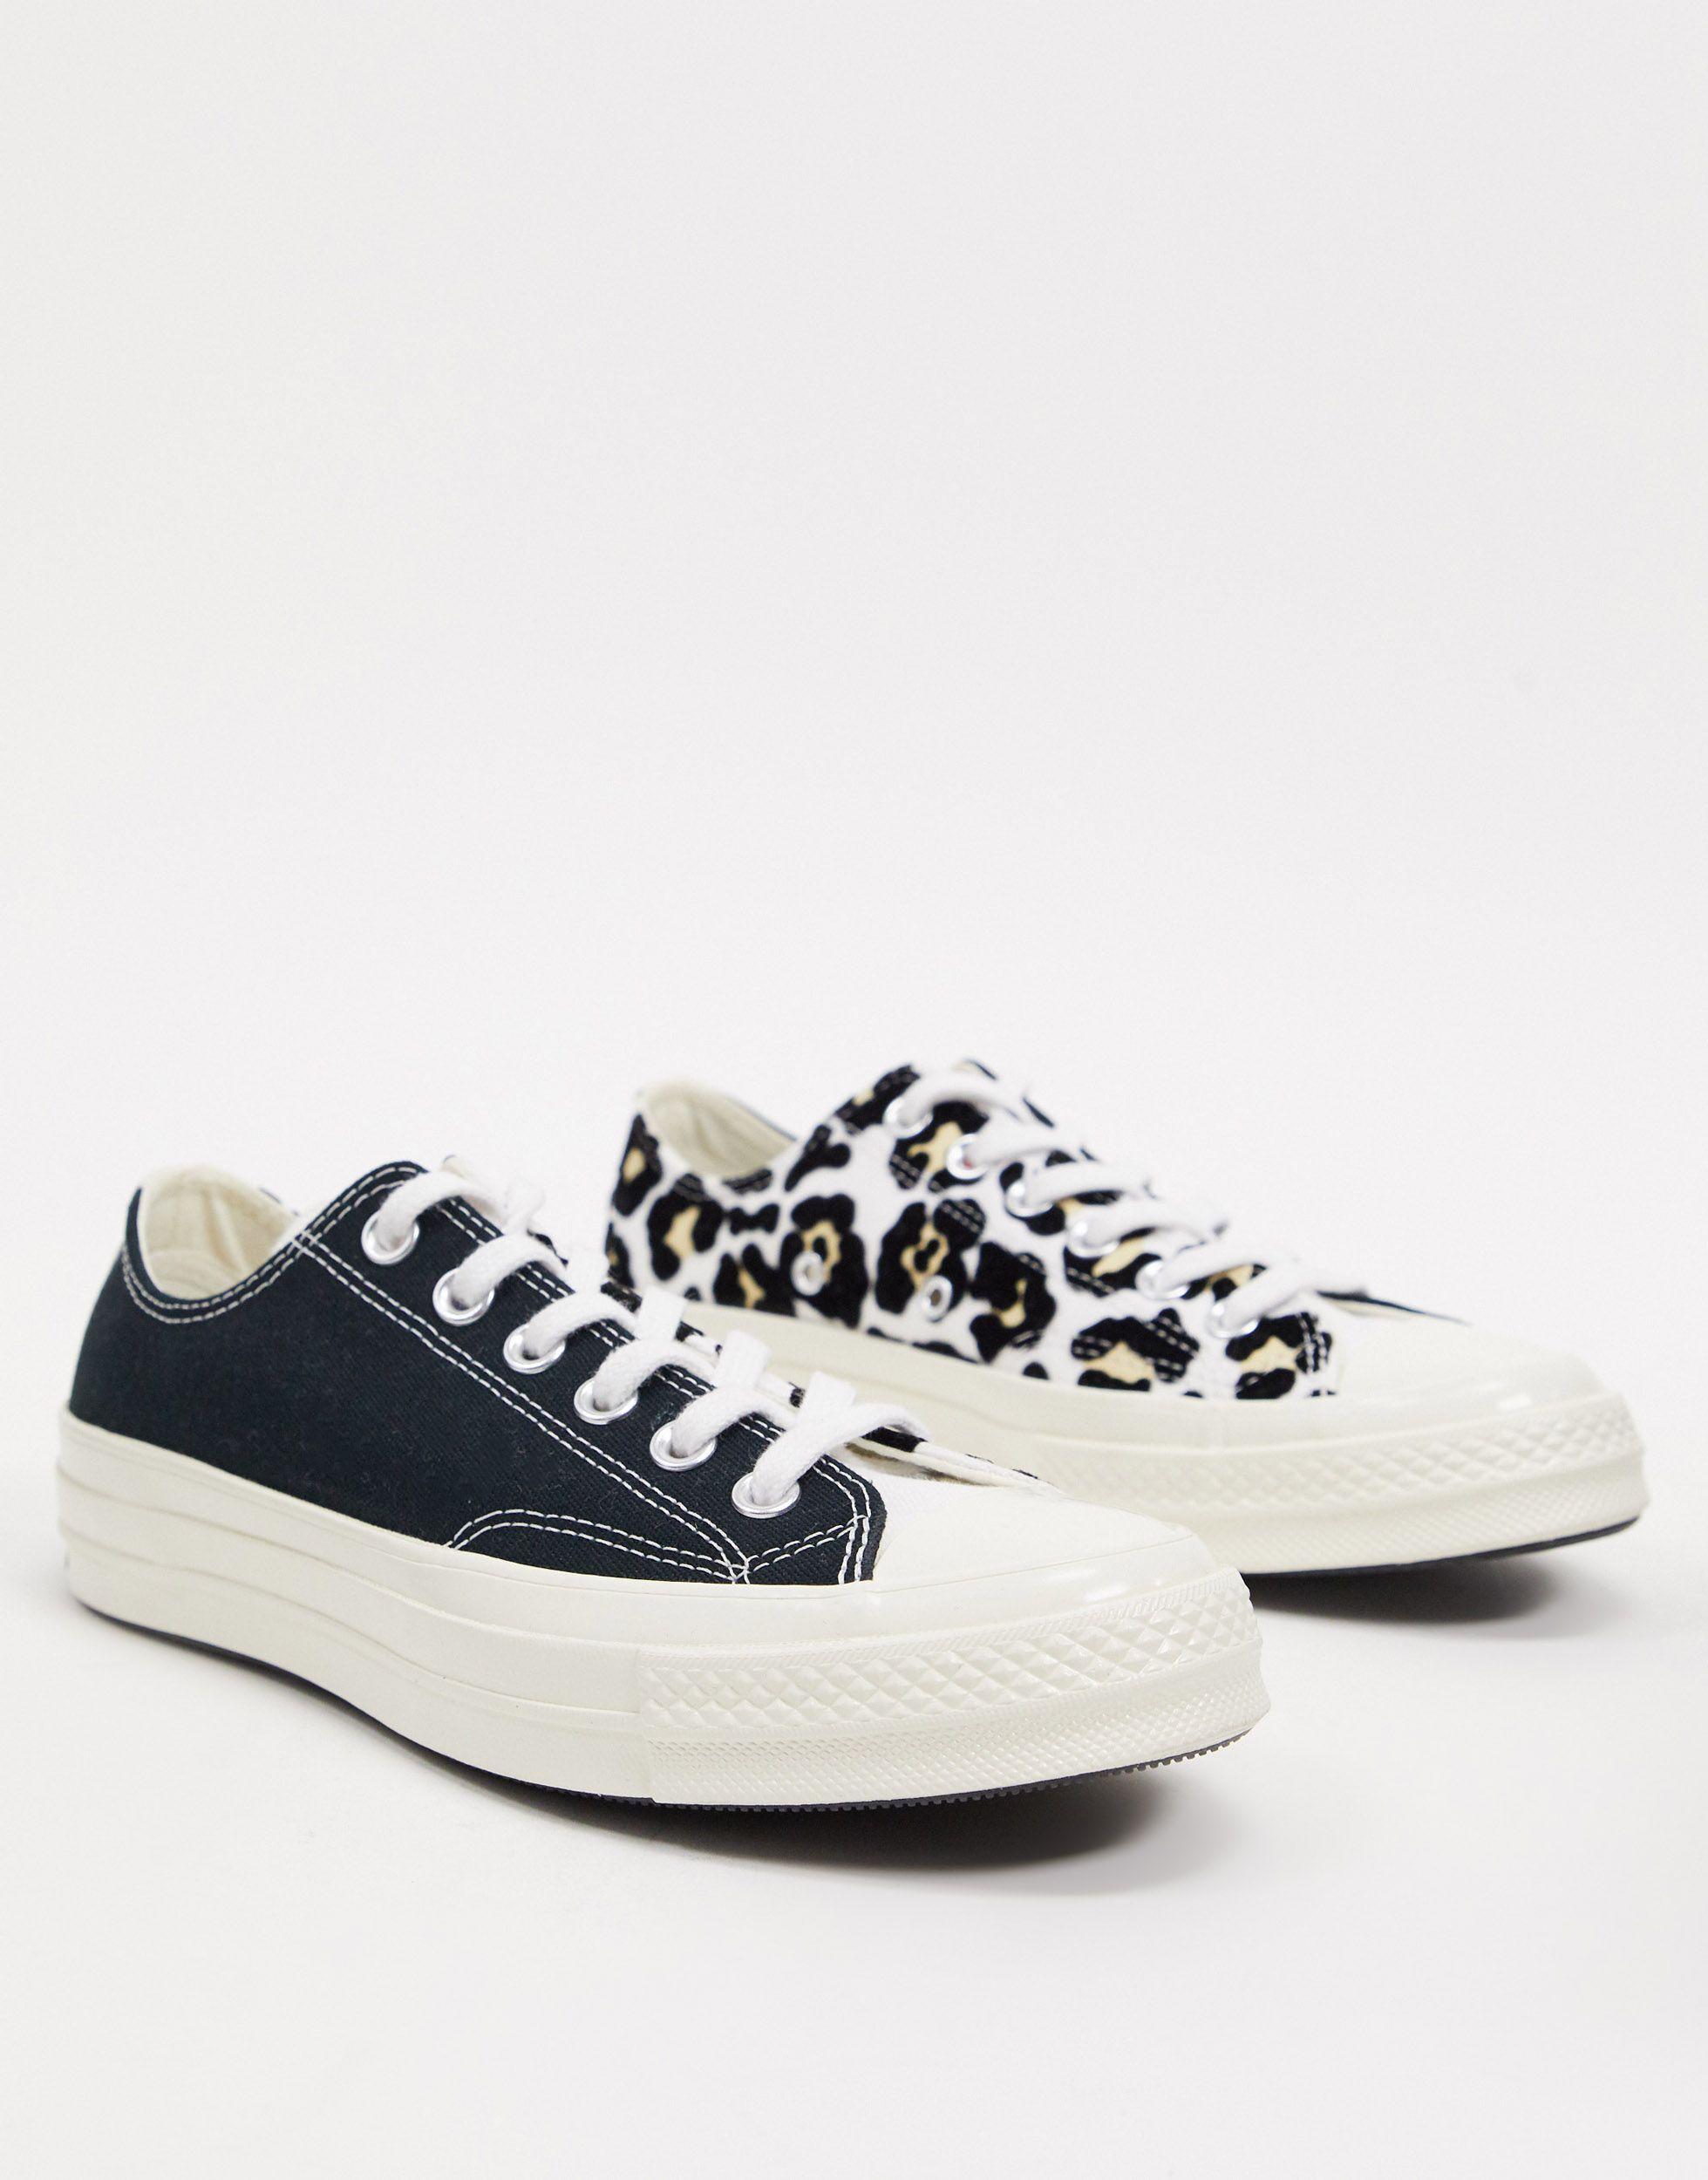 Converse Chuck 70 Ox Flocked Leopard Print Sneakers in Black | Lyst